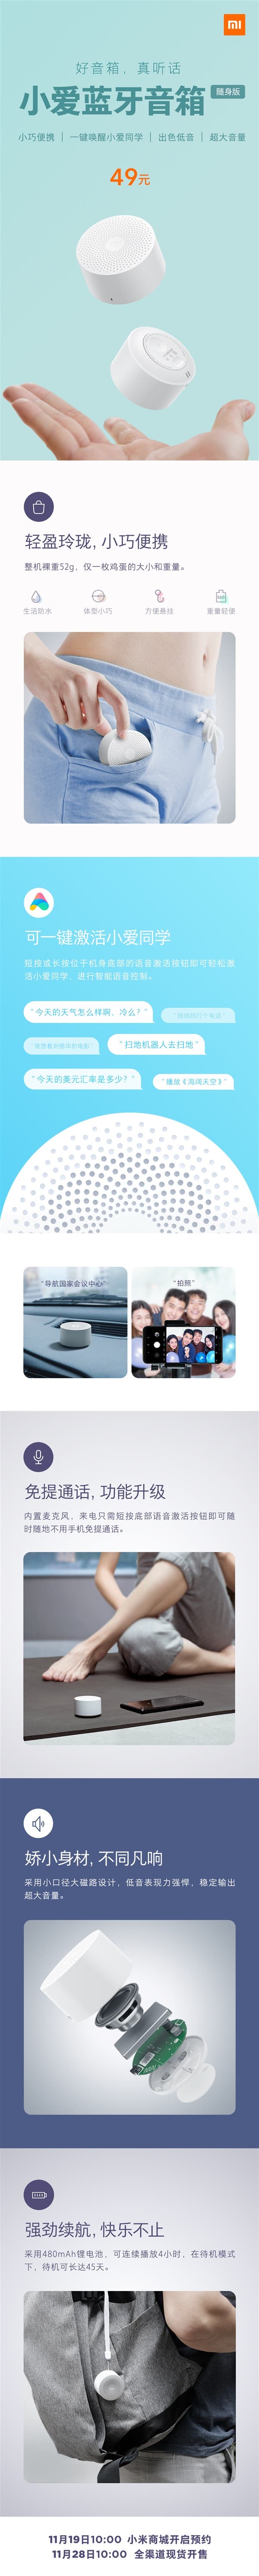 Xiaomi XiaoAi Bluetooth speaker released for 49 Yuan ($7)